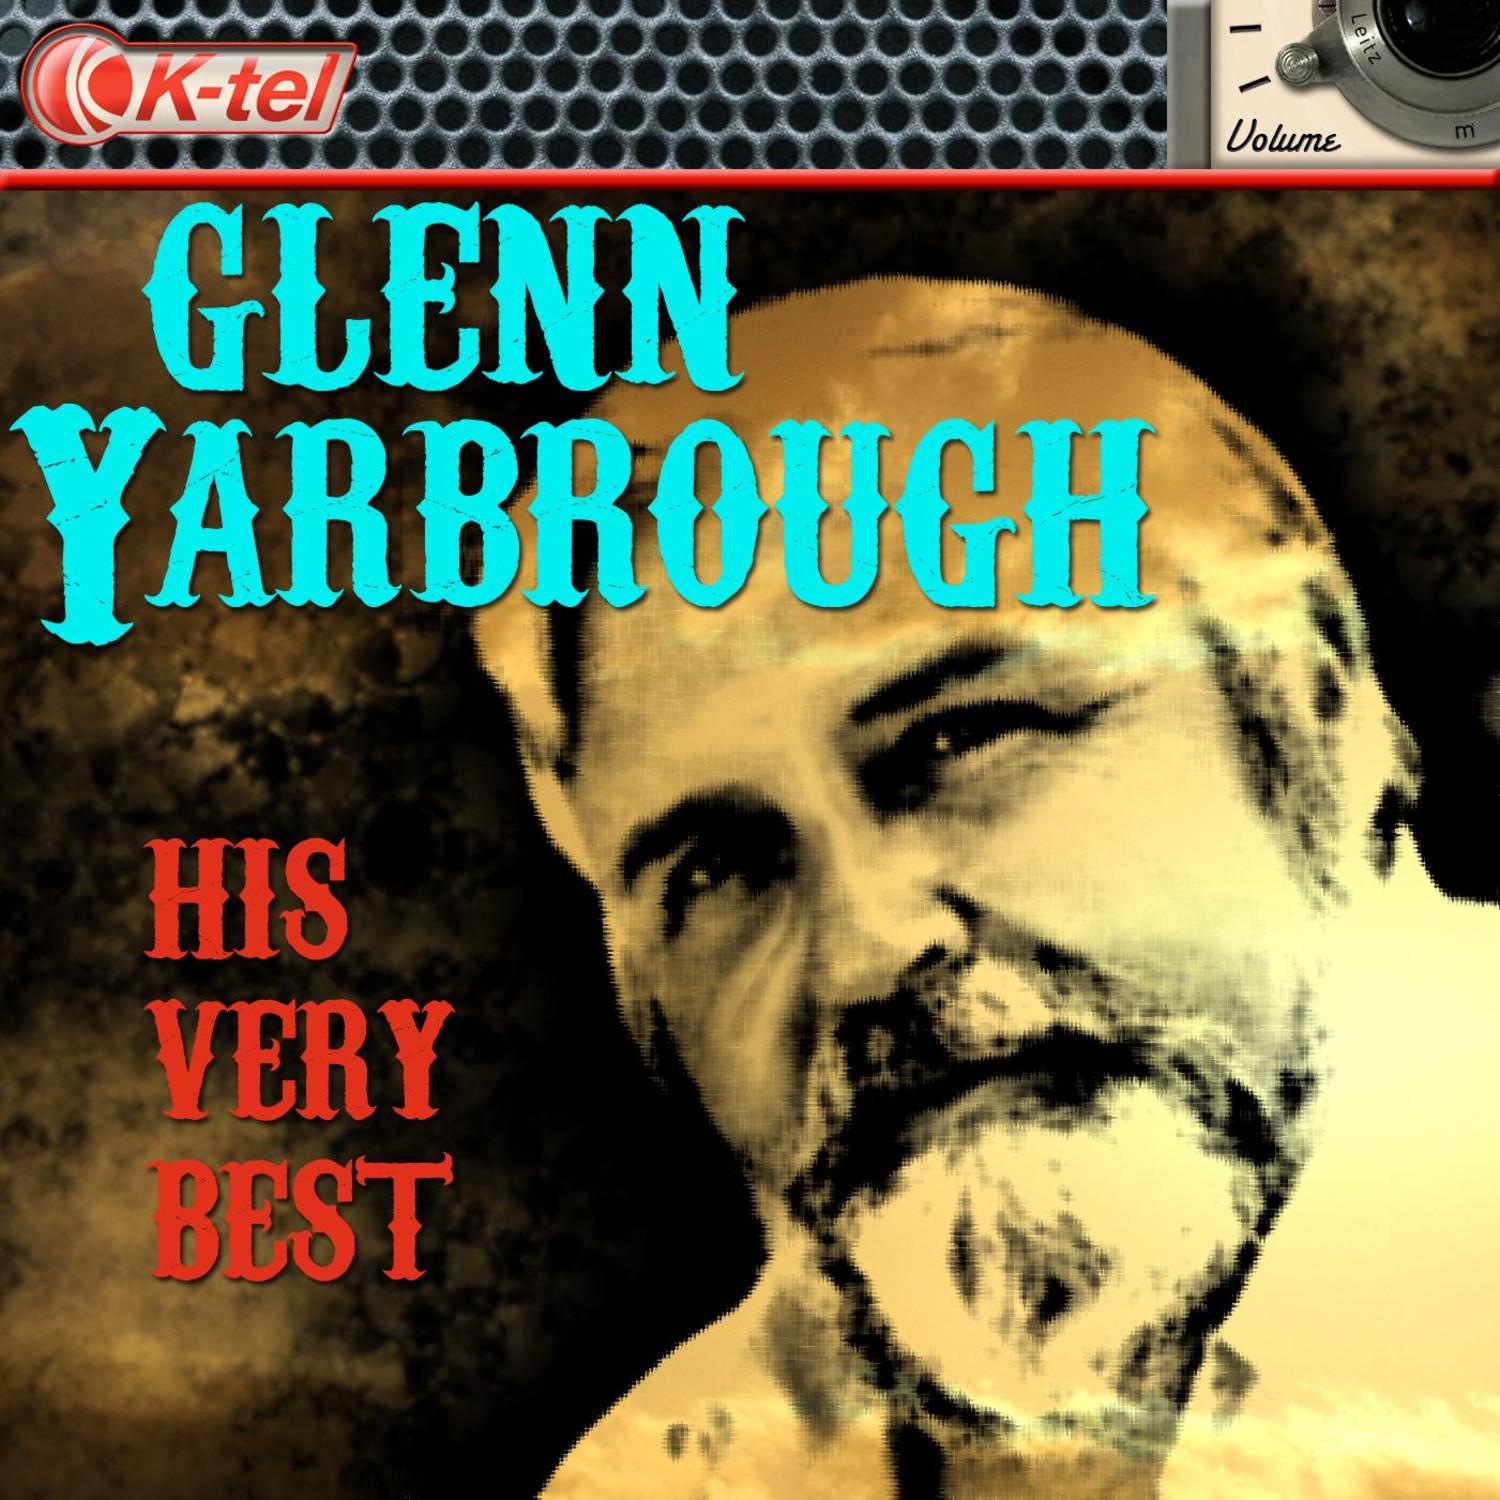 Glenn Yarbrough - His Very Best